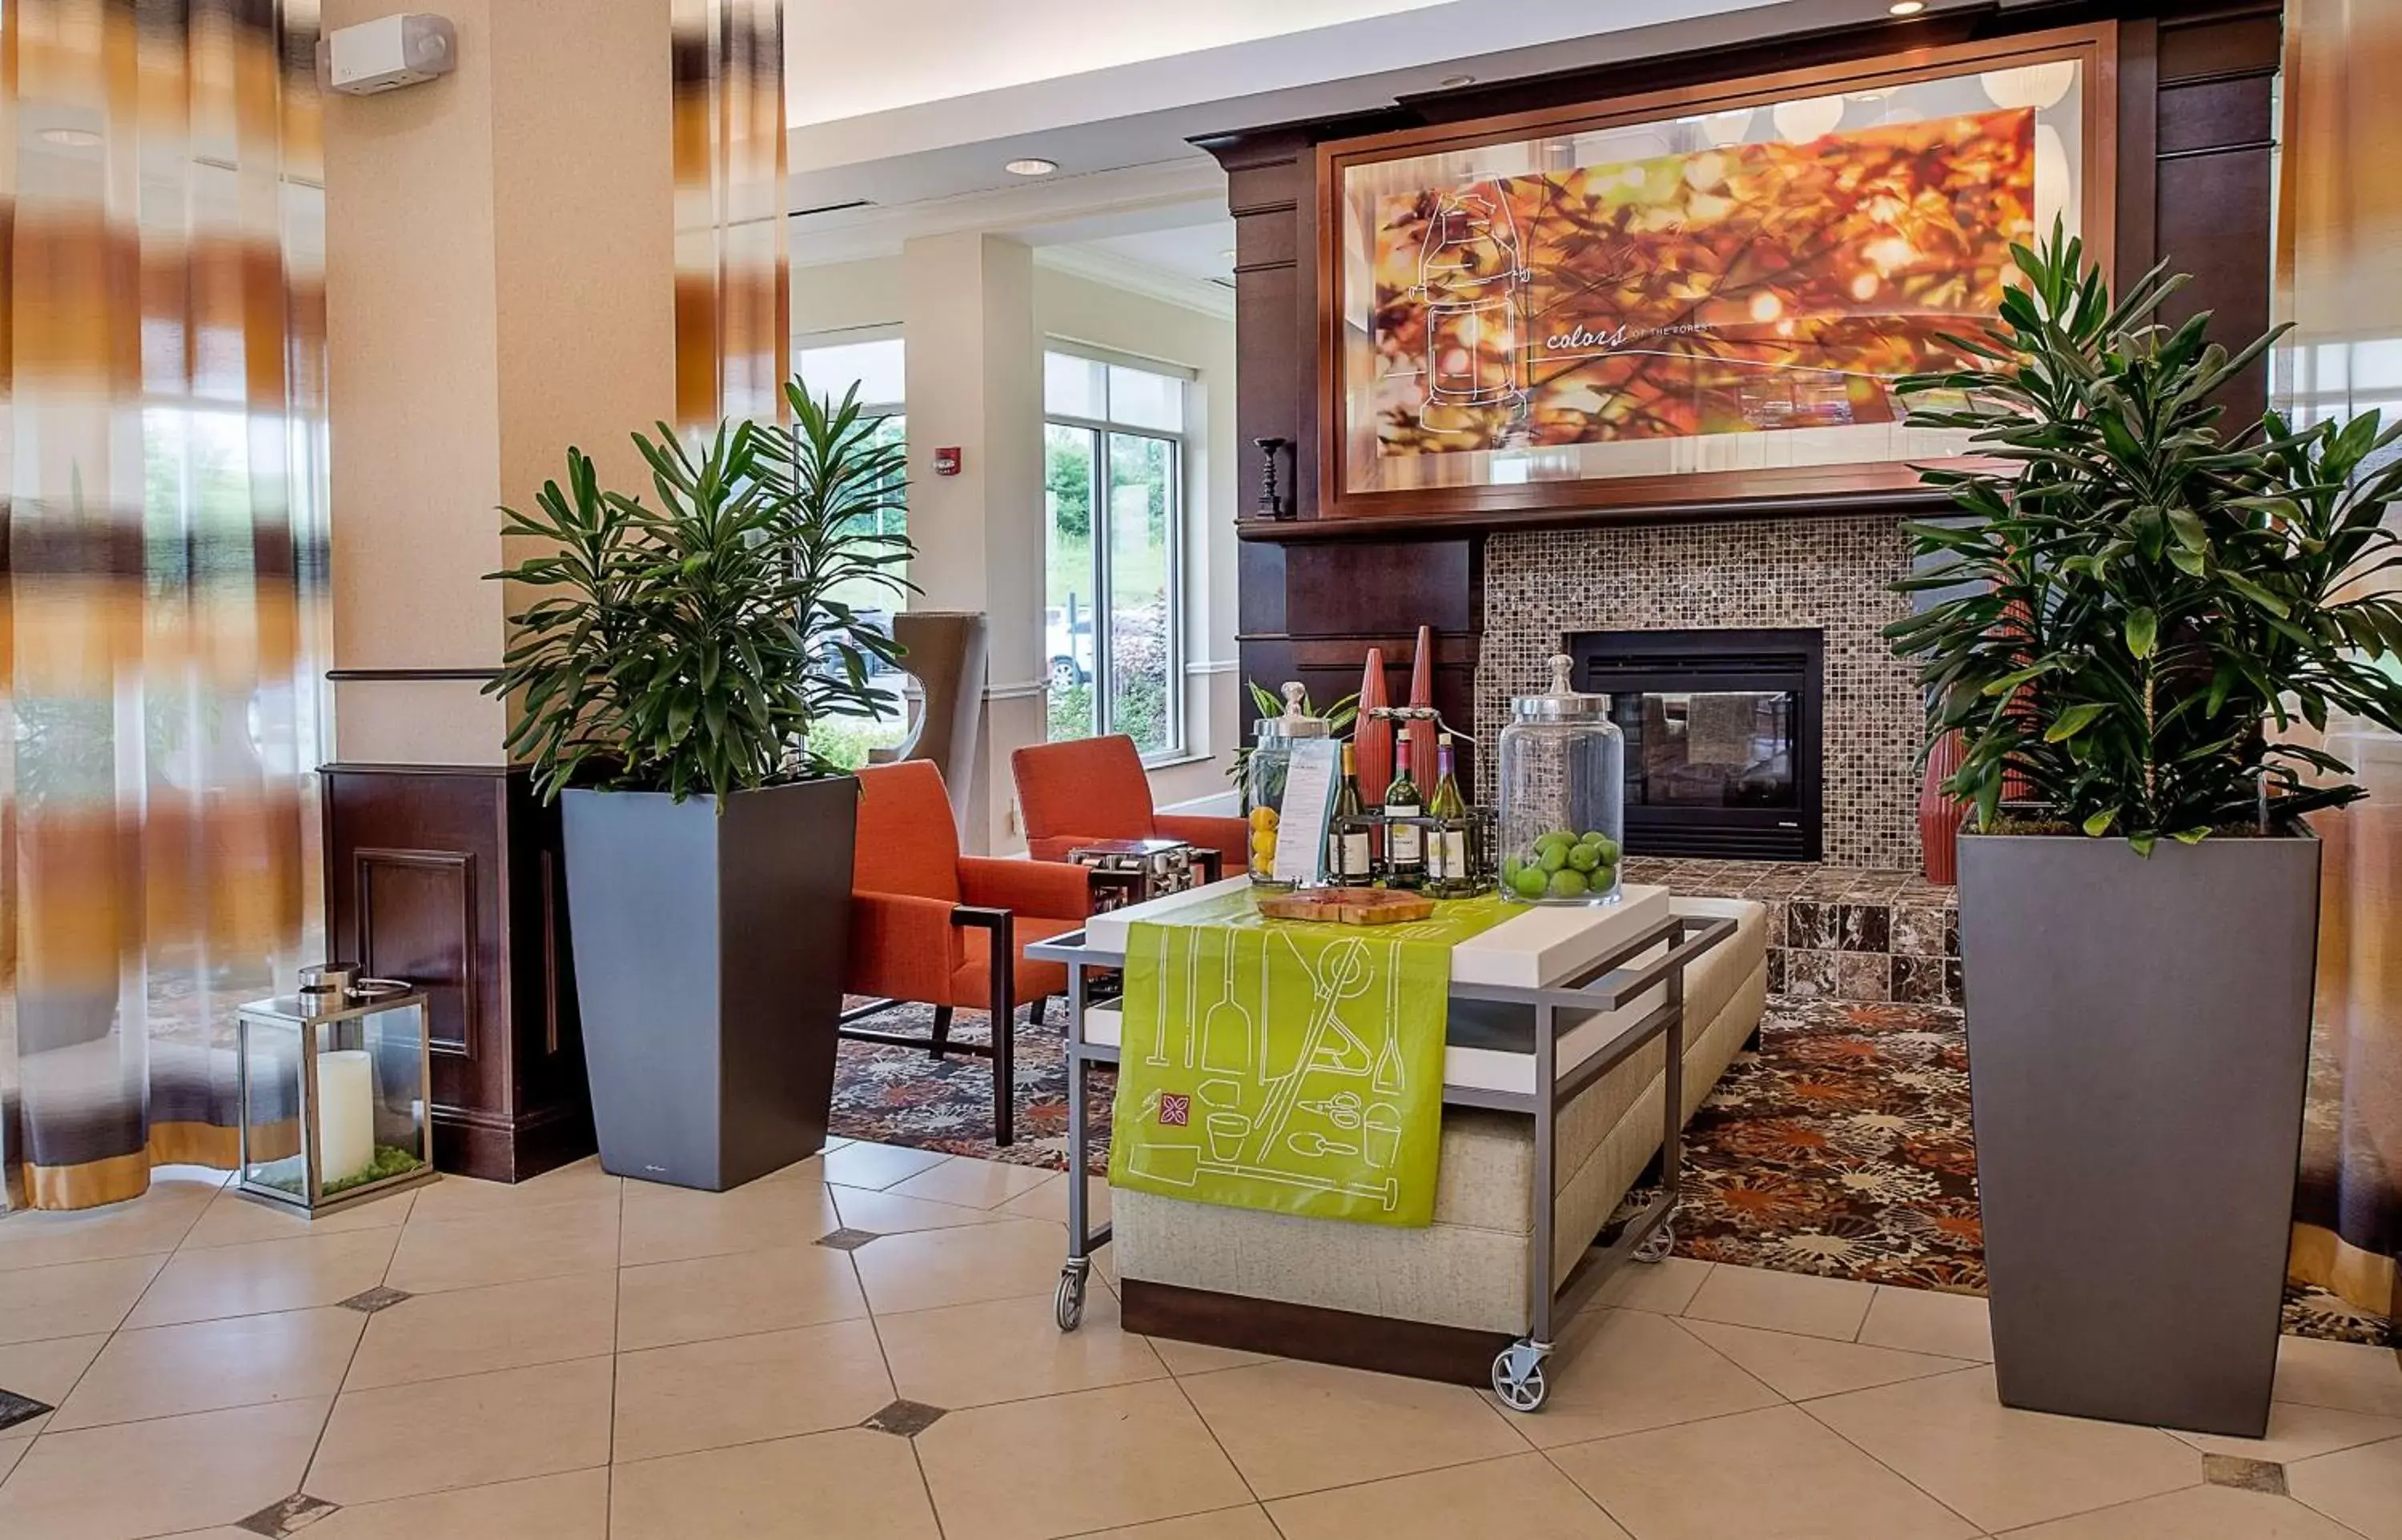 Lobby or reception in Hilton Garden Inn St. Louis Airport